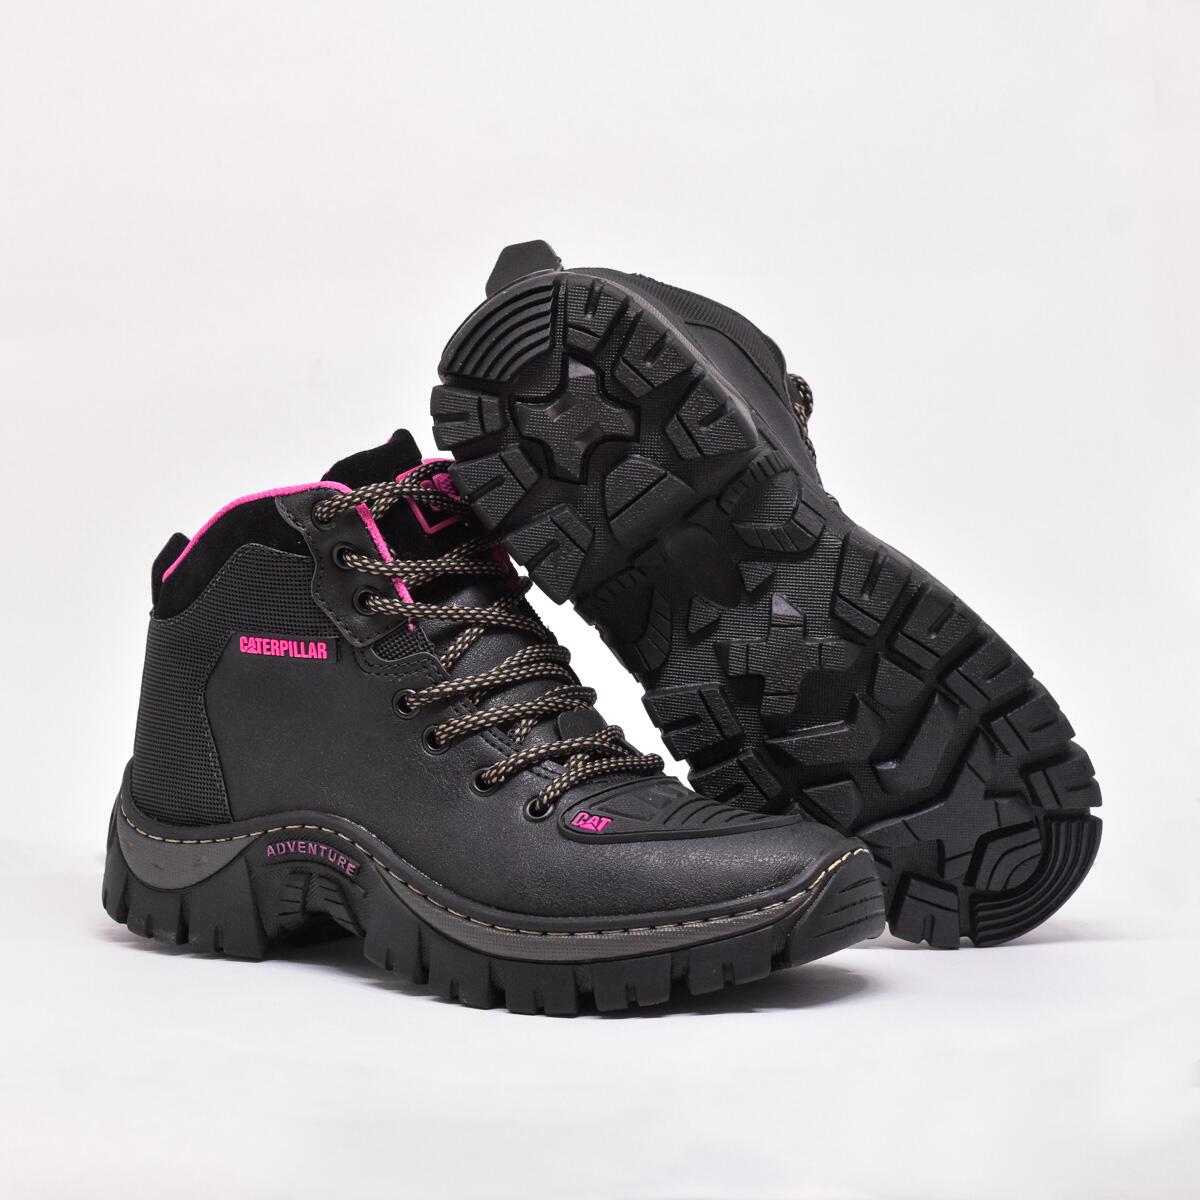 Comprar Bota Caterpillar Adventure Feminina - a partir de R$116,91 - Dunk  Shoes Distribuidora de Calçados Nacionais e Importados Fazemos Dropshipping